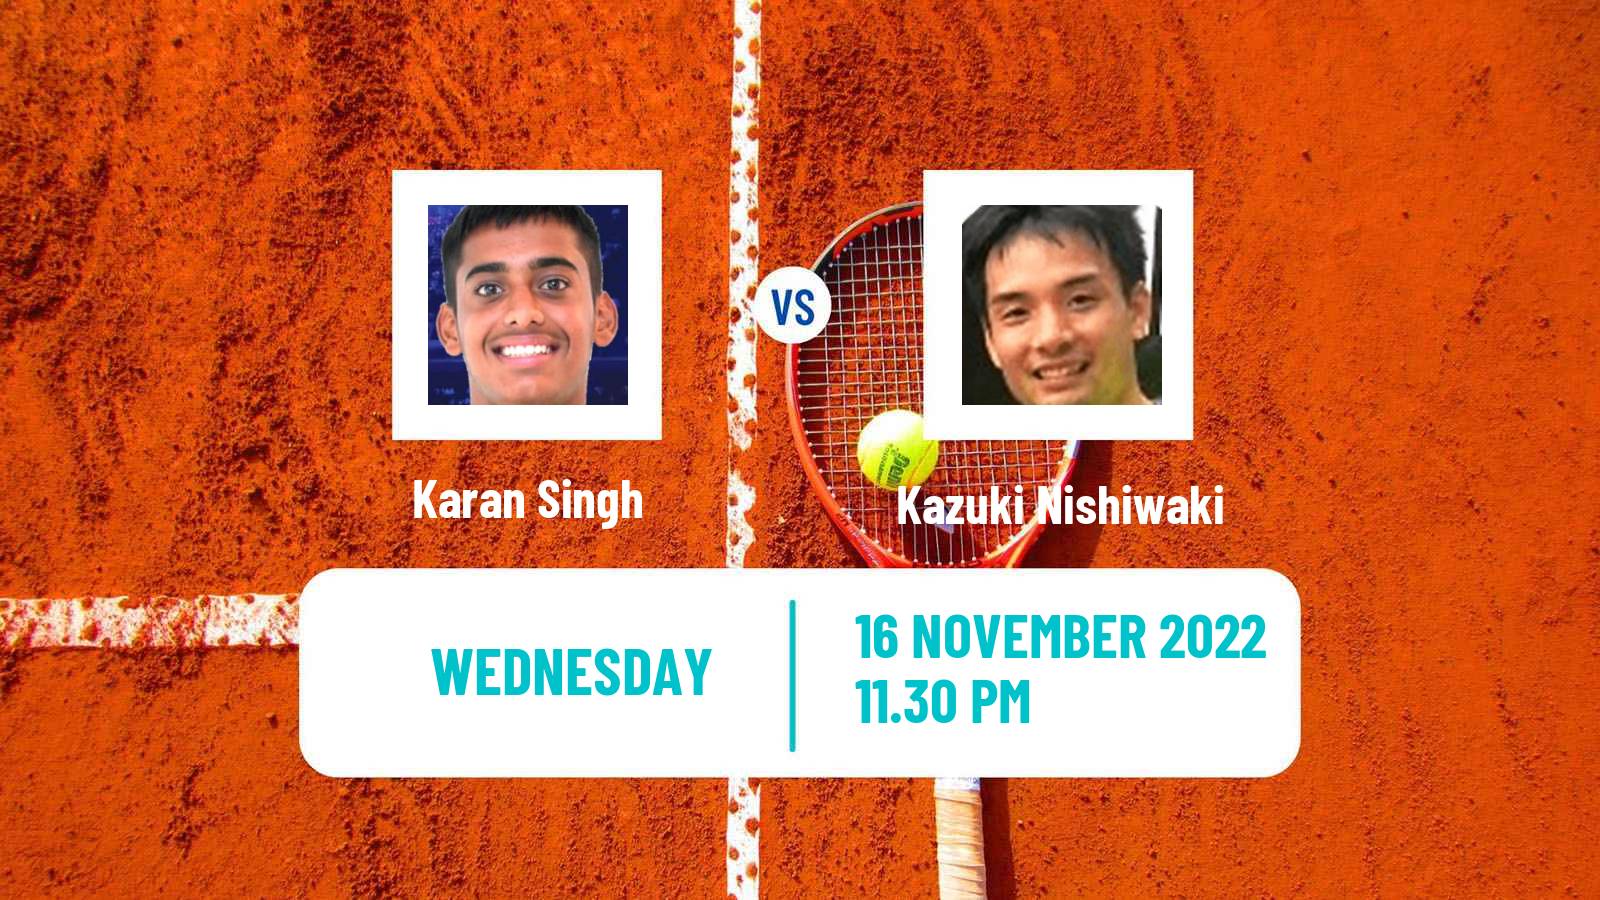 Tennis ITF Tournaments Karan Singh - Kazuki Nishiwaki